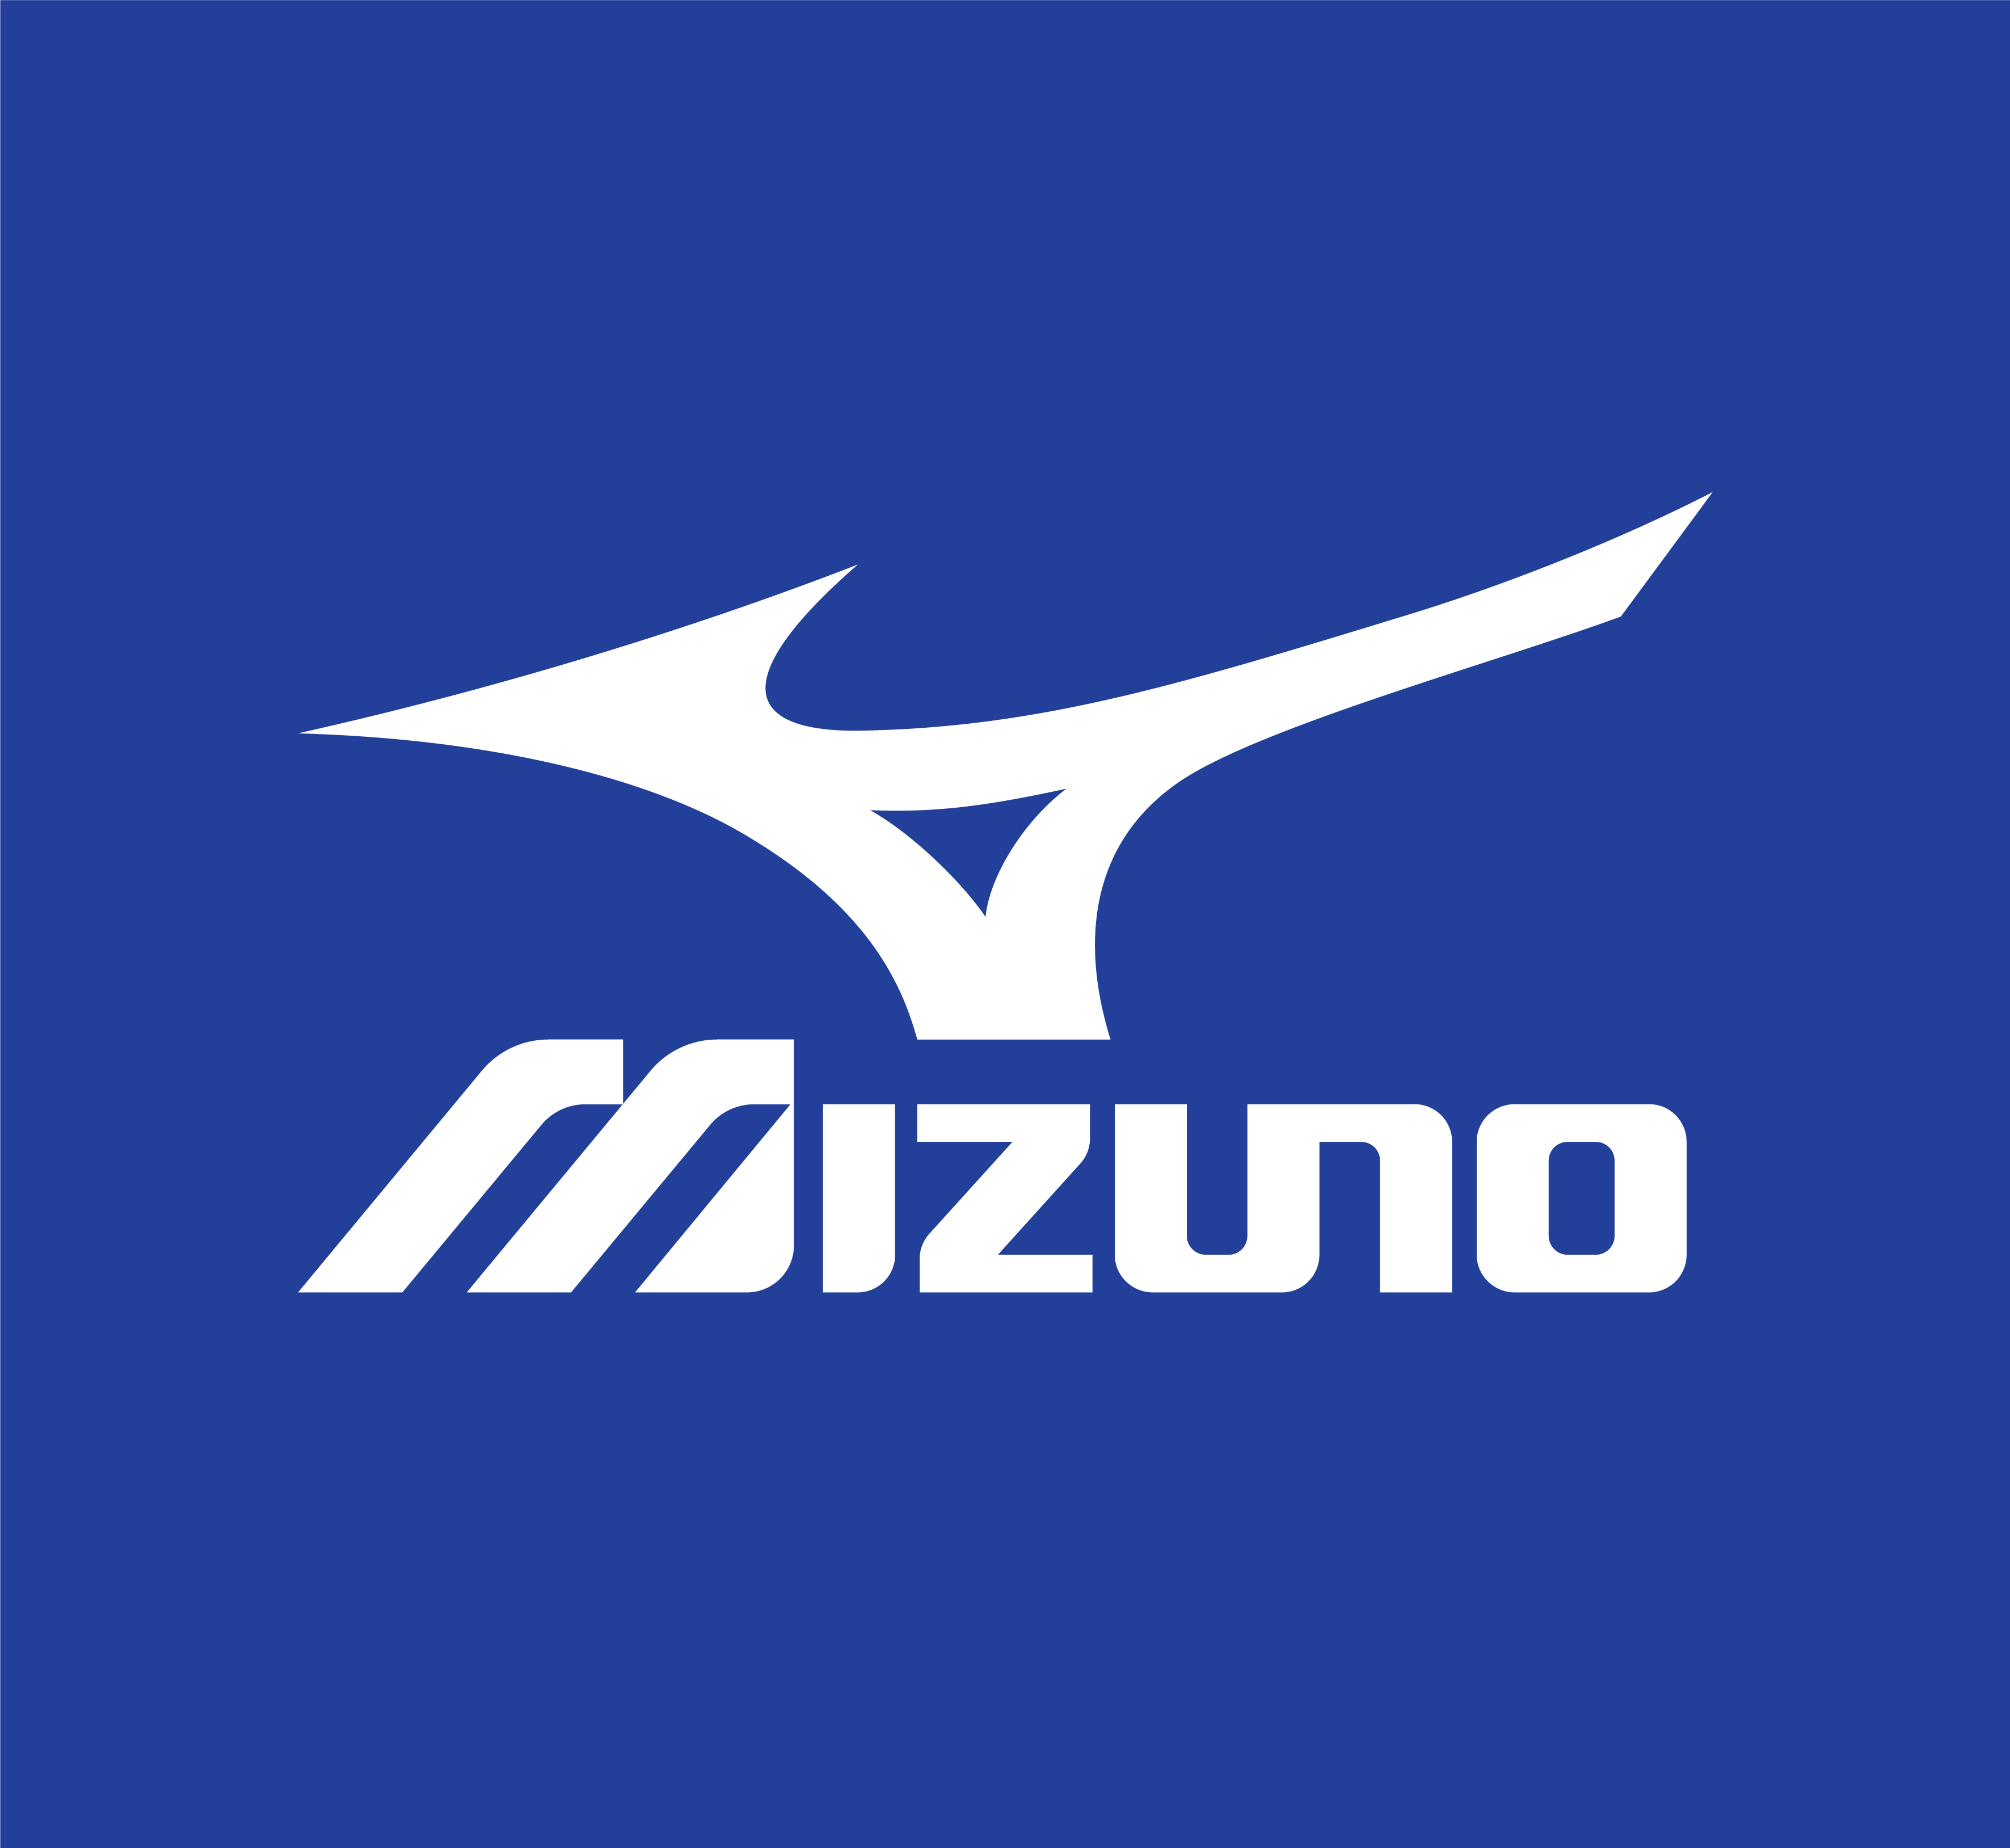 Mizuno Wave Rider 22 Review